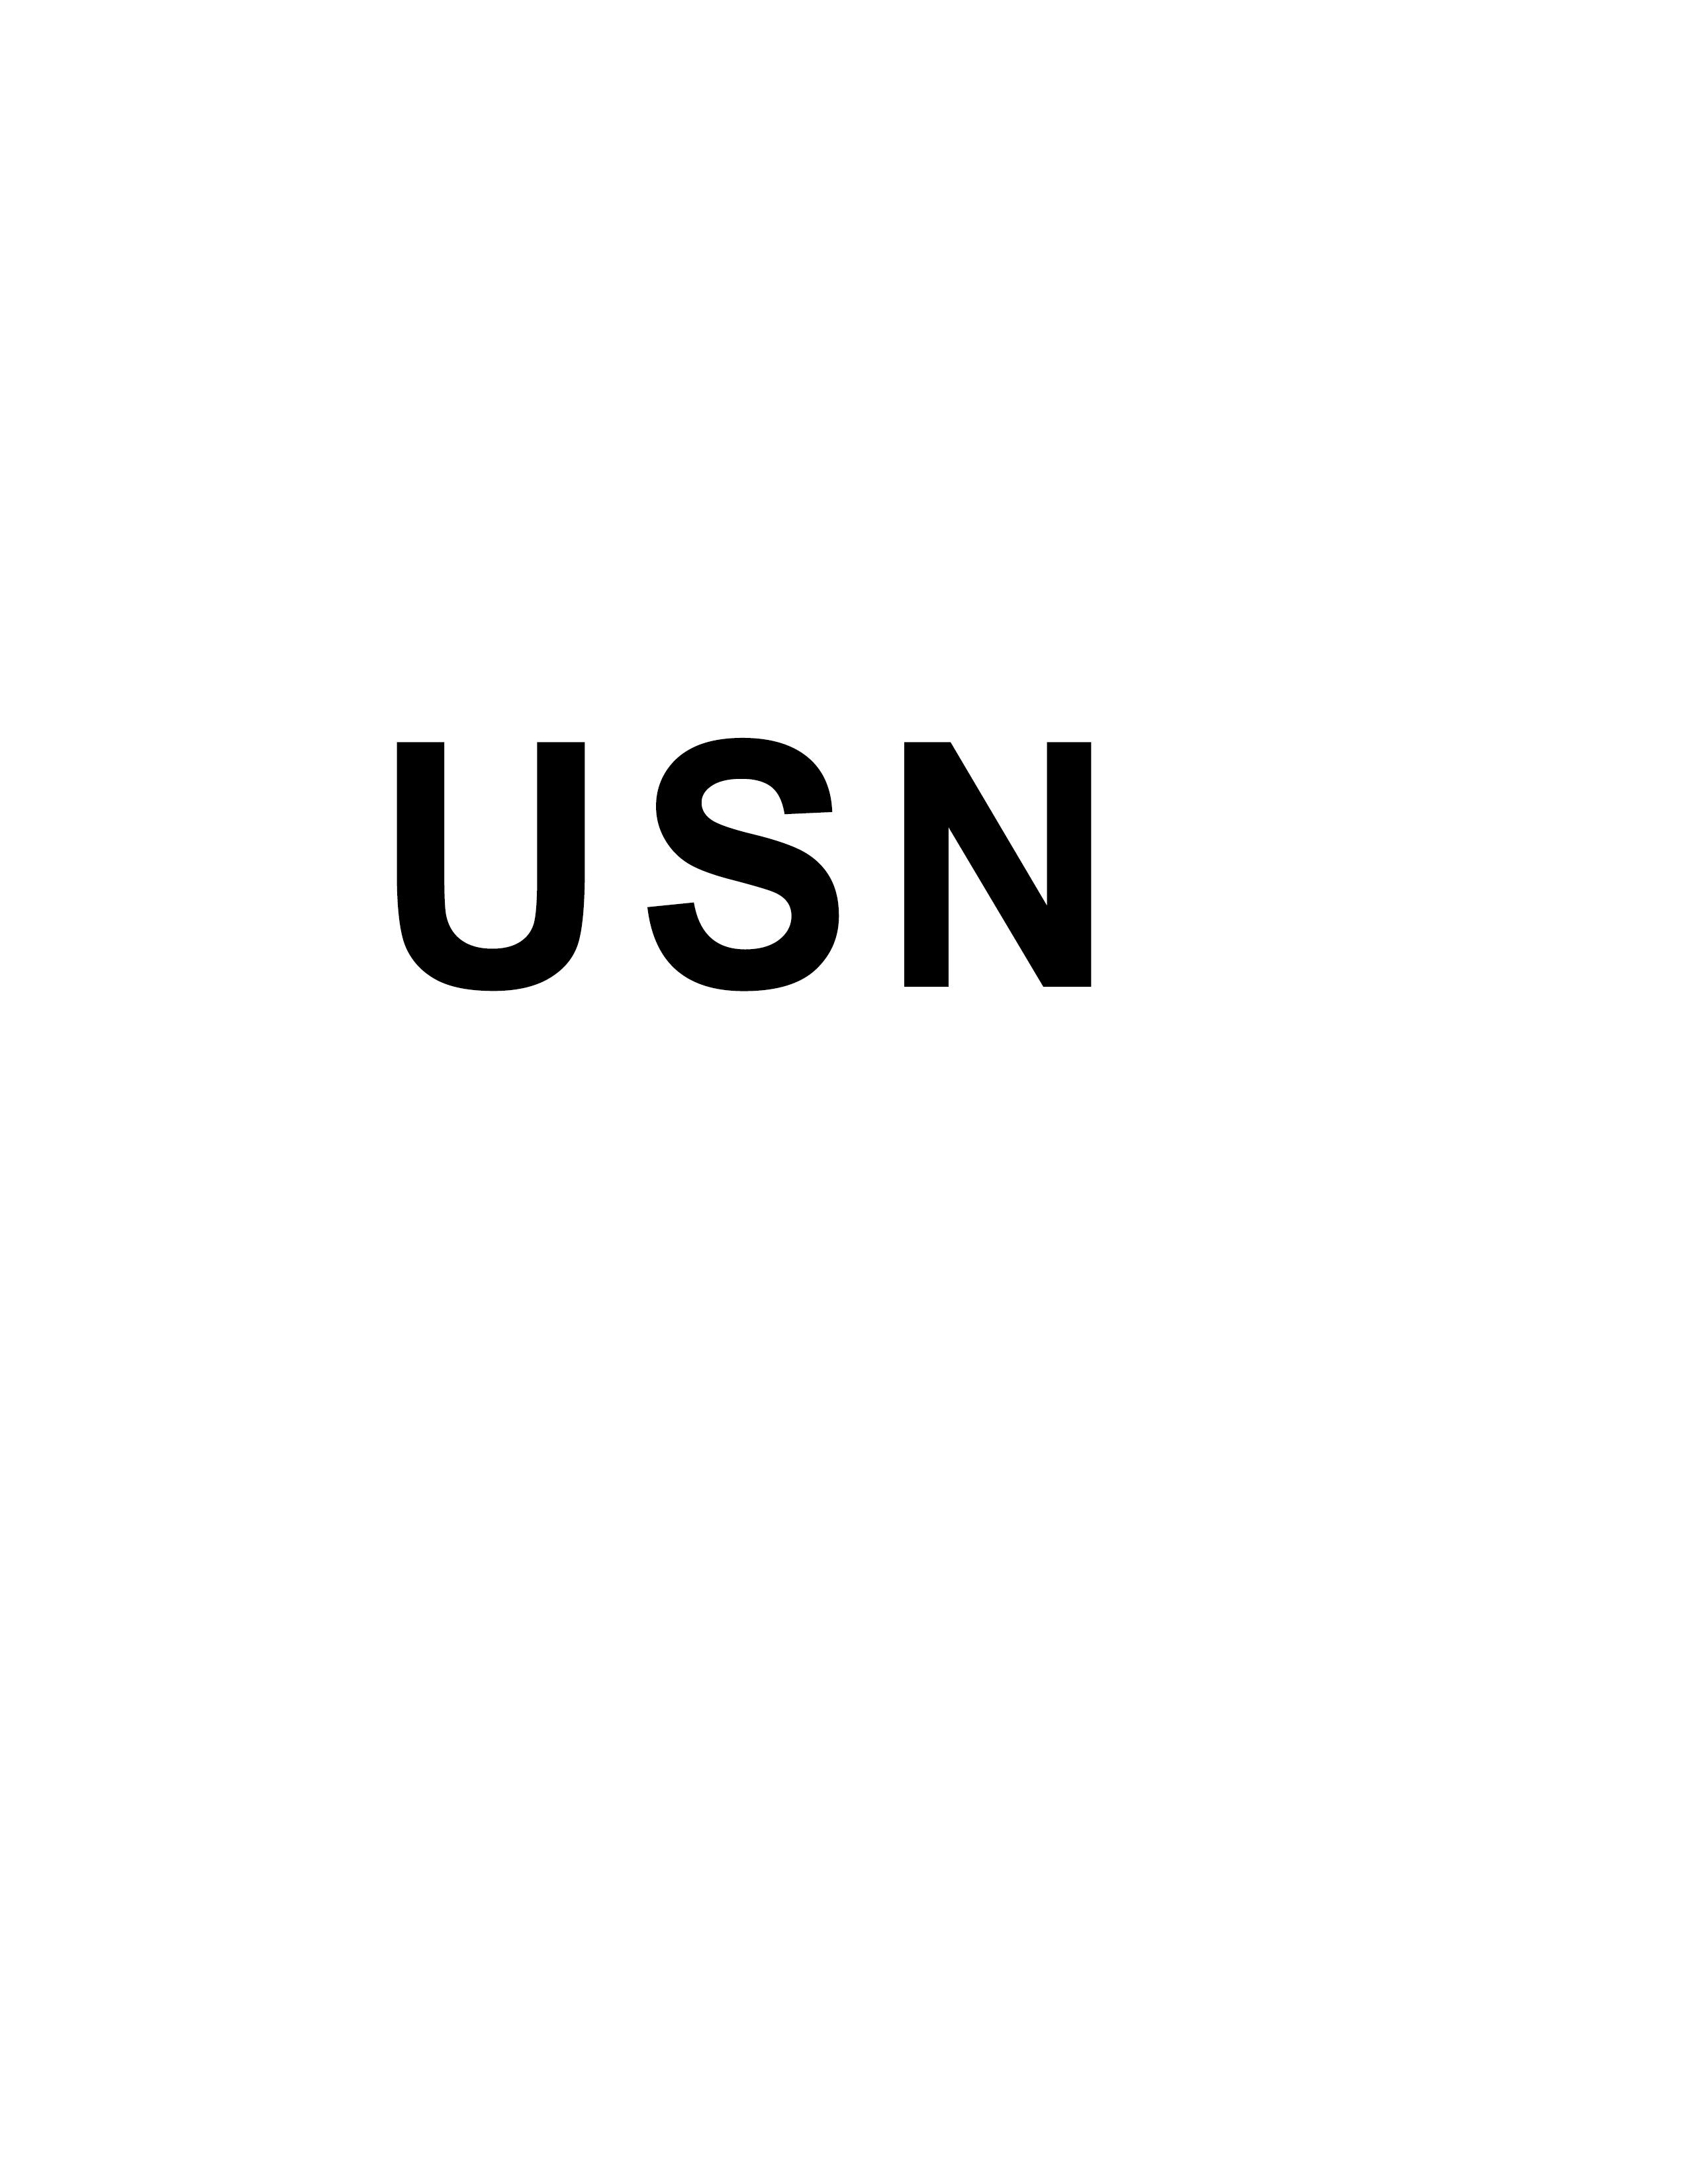 USN Stencil 6.jpg